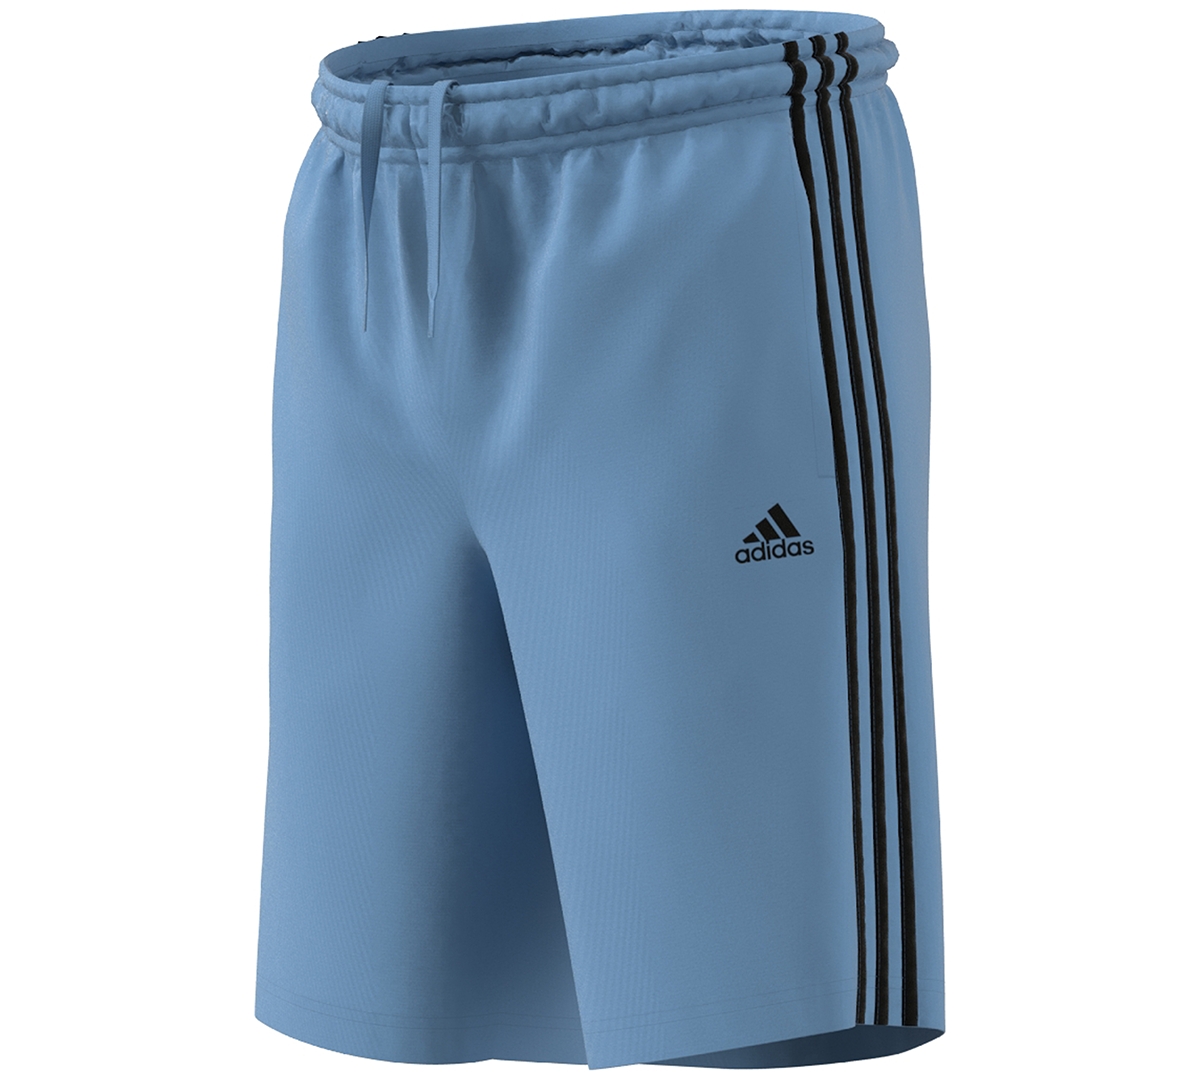 Adidas Originals Men's Tricot Striped 10" Shorts In Blue Burst,blk